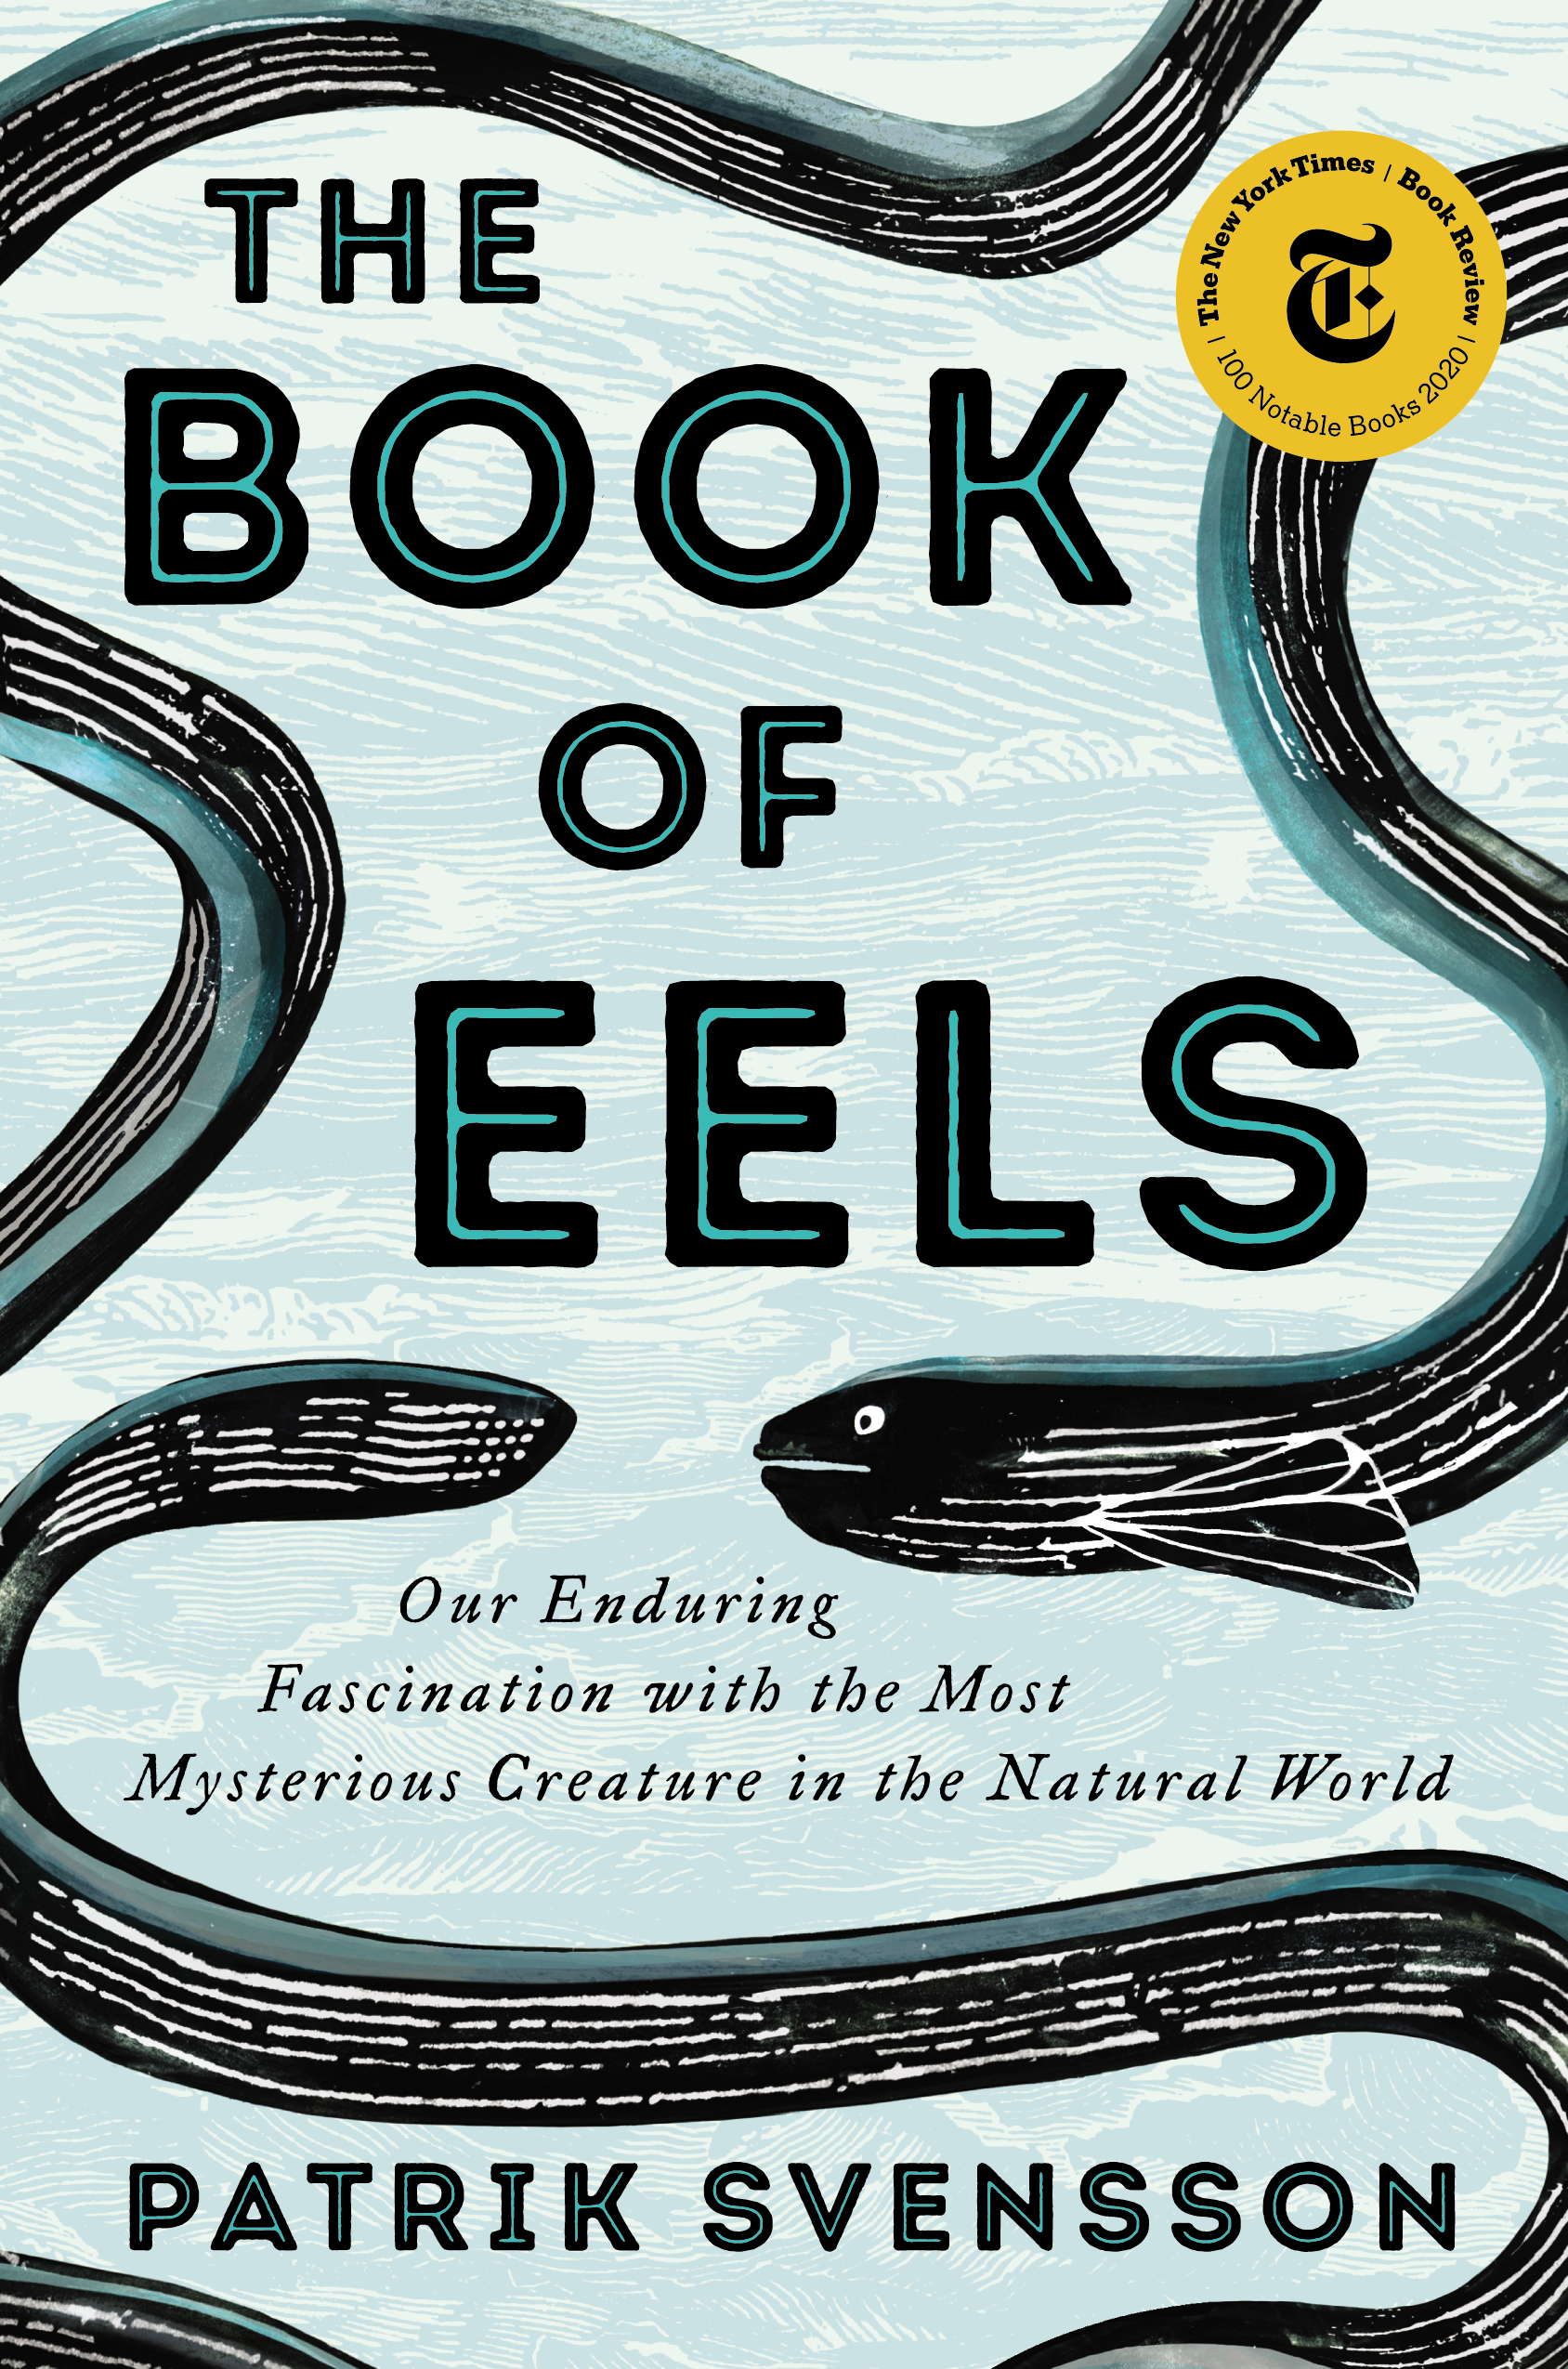 Patrik Svensson's The Gospel of Eels book cover